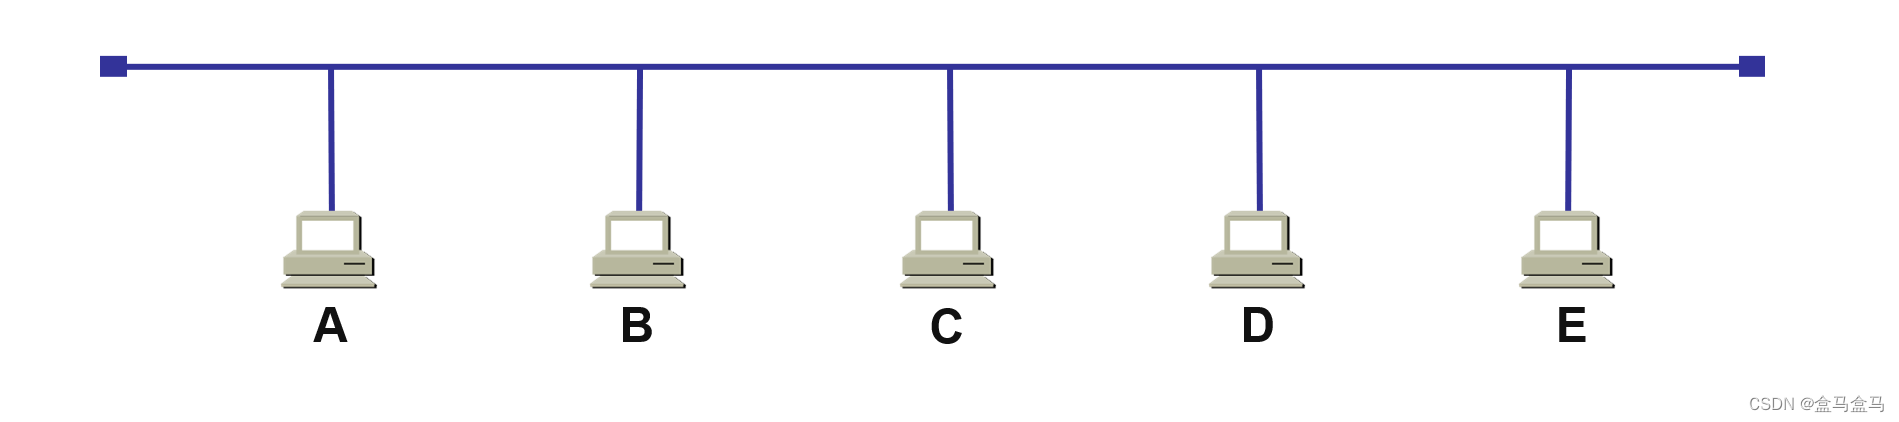 计算机网络：CSMA/CD协议